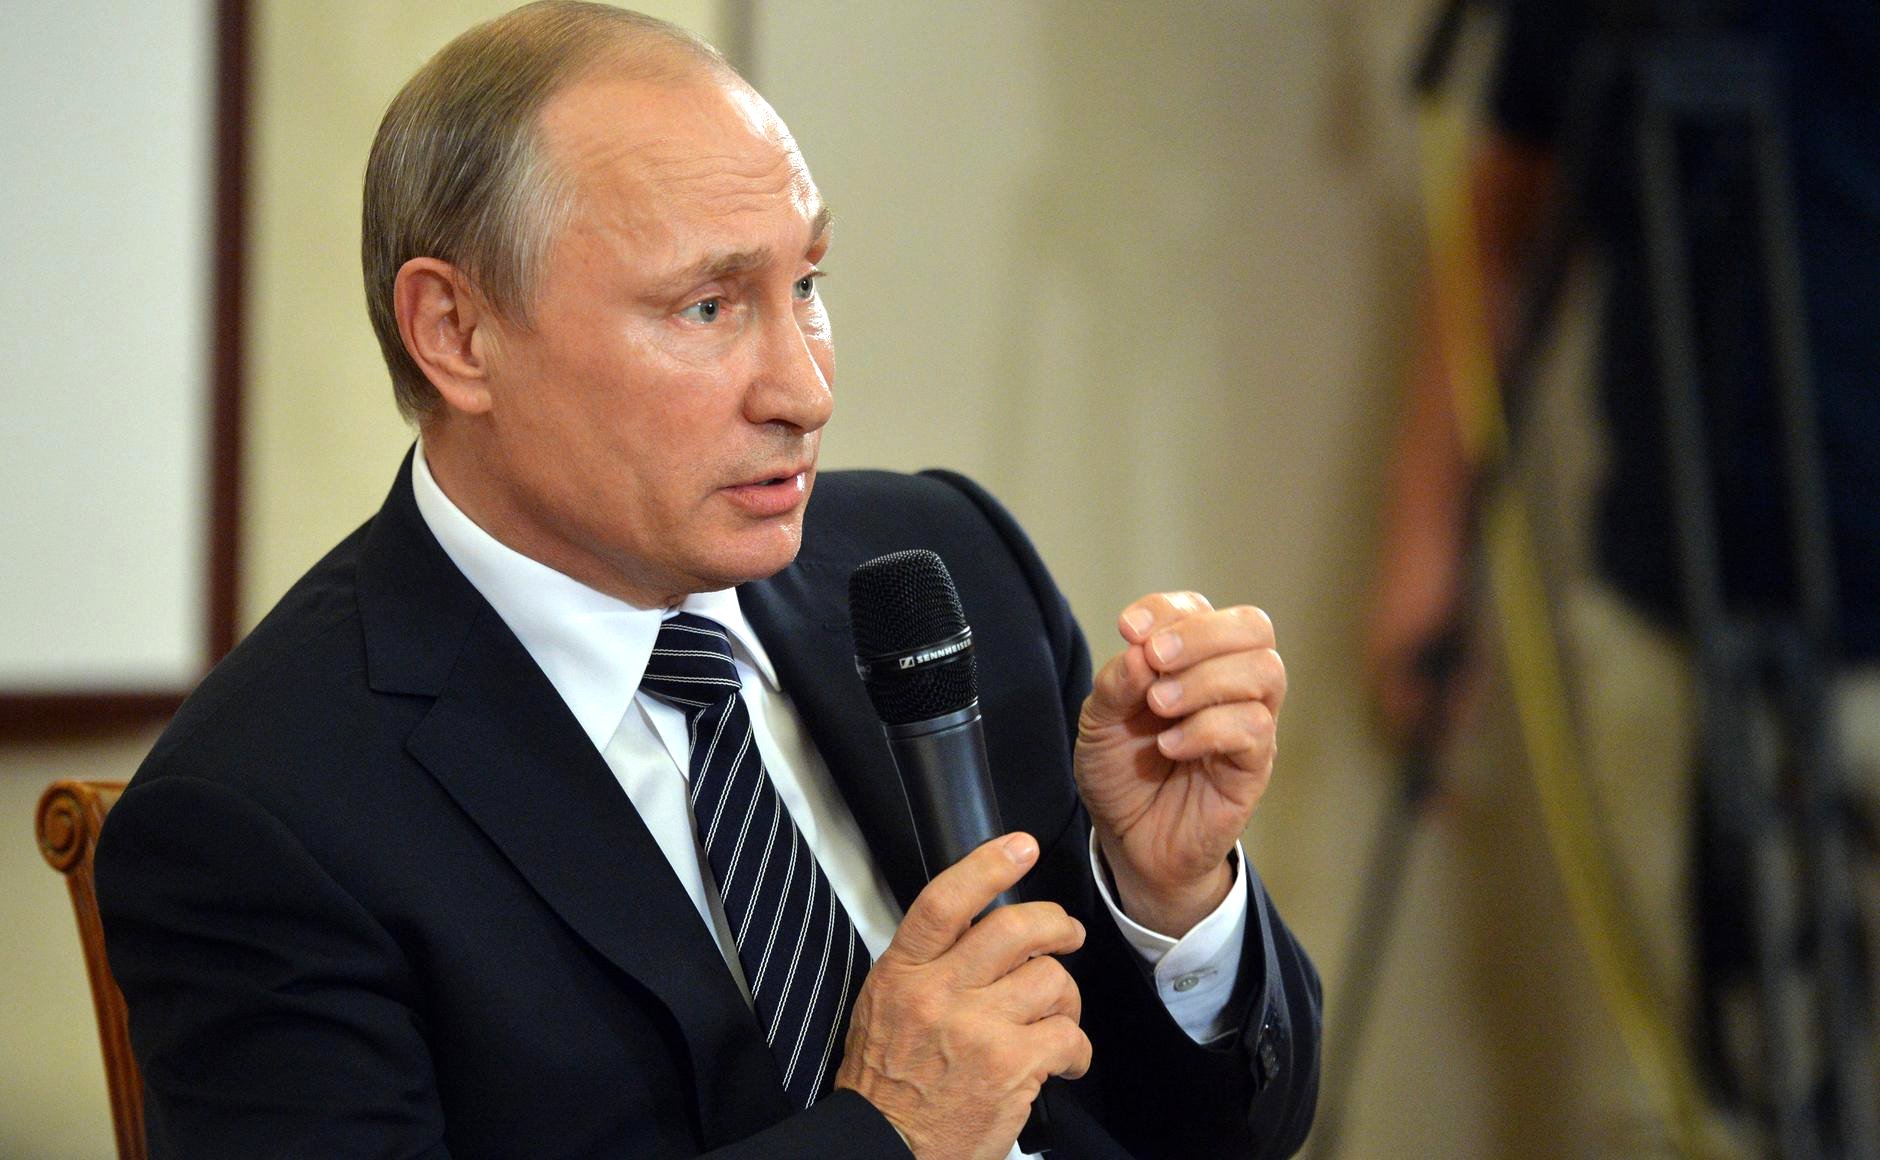 "Rusia kini hanya akan bergerak maju dan tumbuh lebih kuat," kata Presiden Rusia Vladimir Putin.